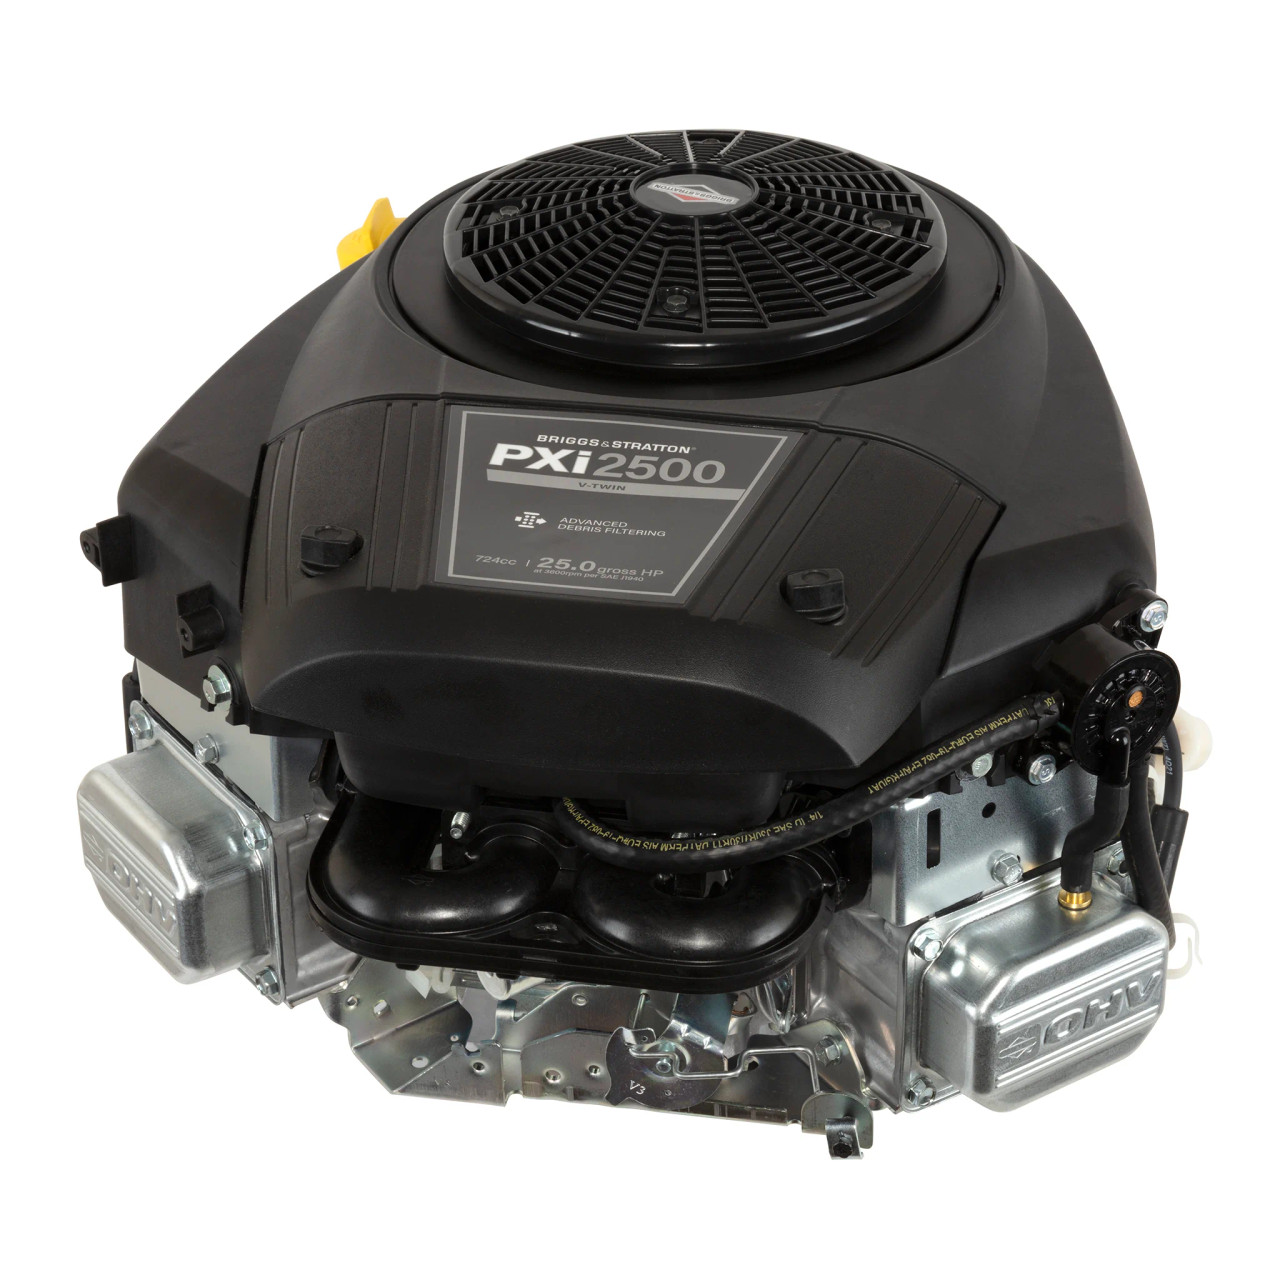 Professional Series 25.0 HP 724cc Vertical Shaft Engine 44S977-0016-G1